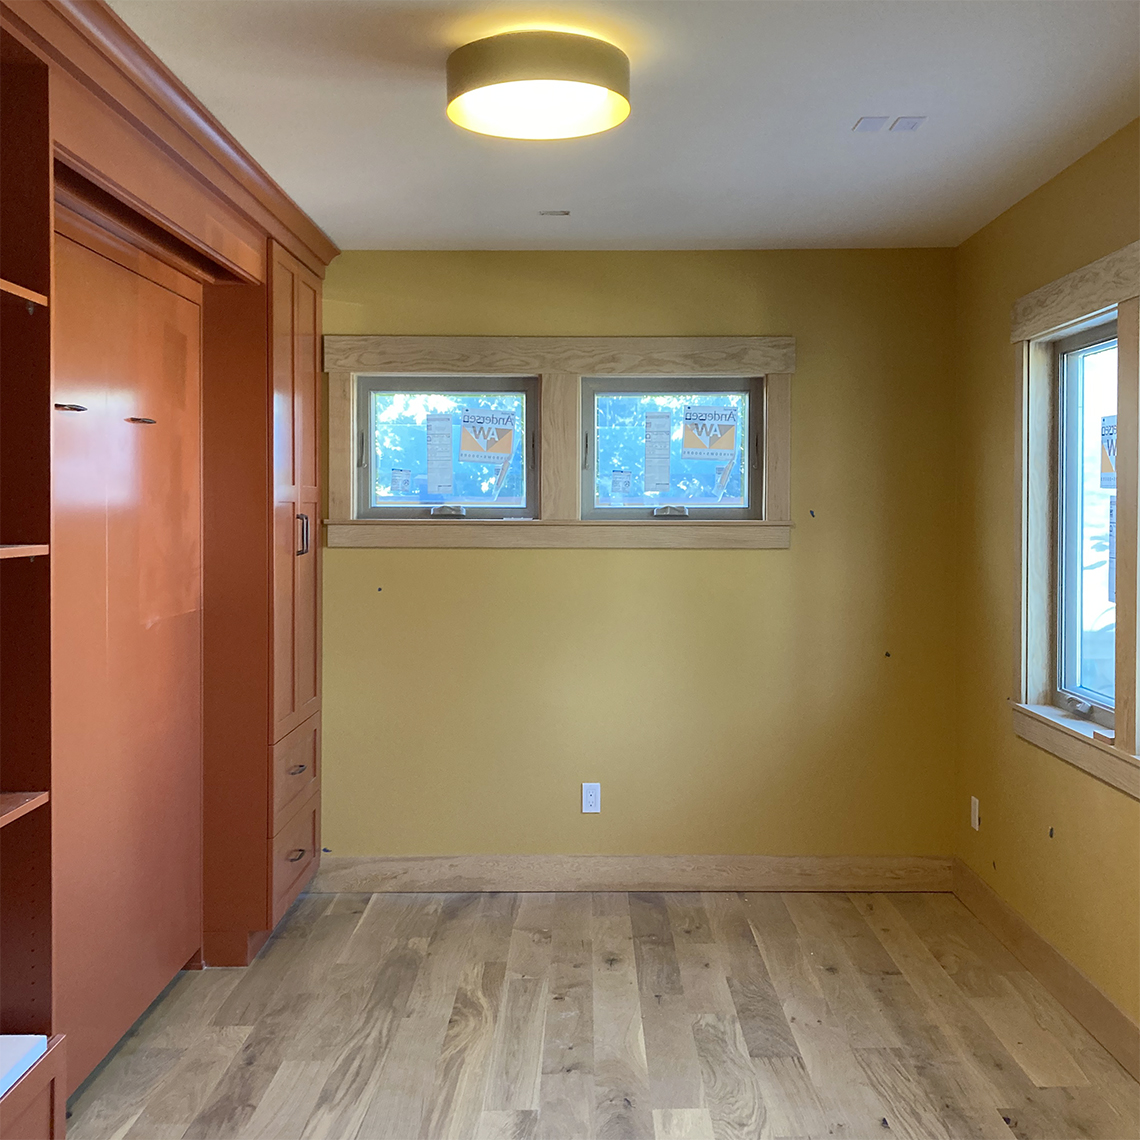 Brett Marlo Design Build Built Green 4-Star Tacoma remodel bedroom with murphy bed